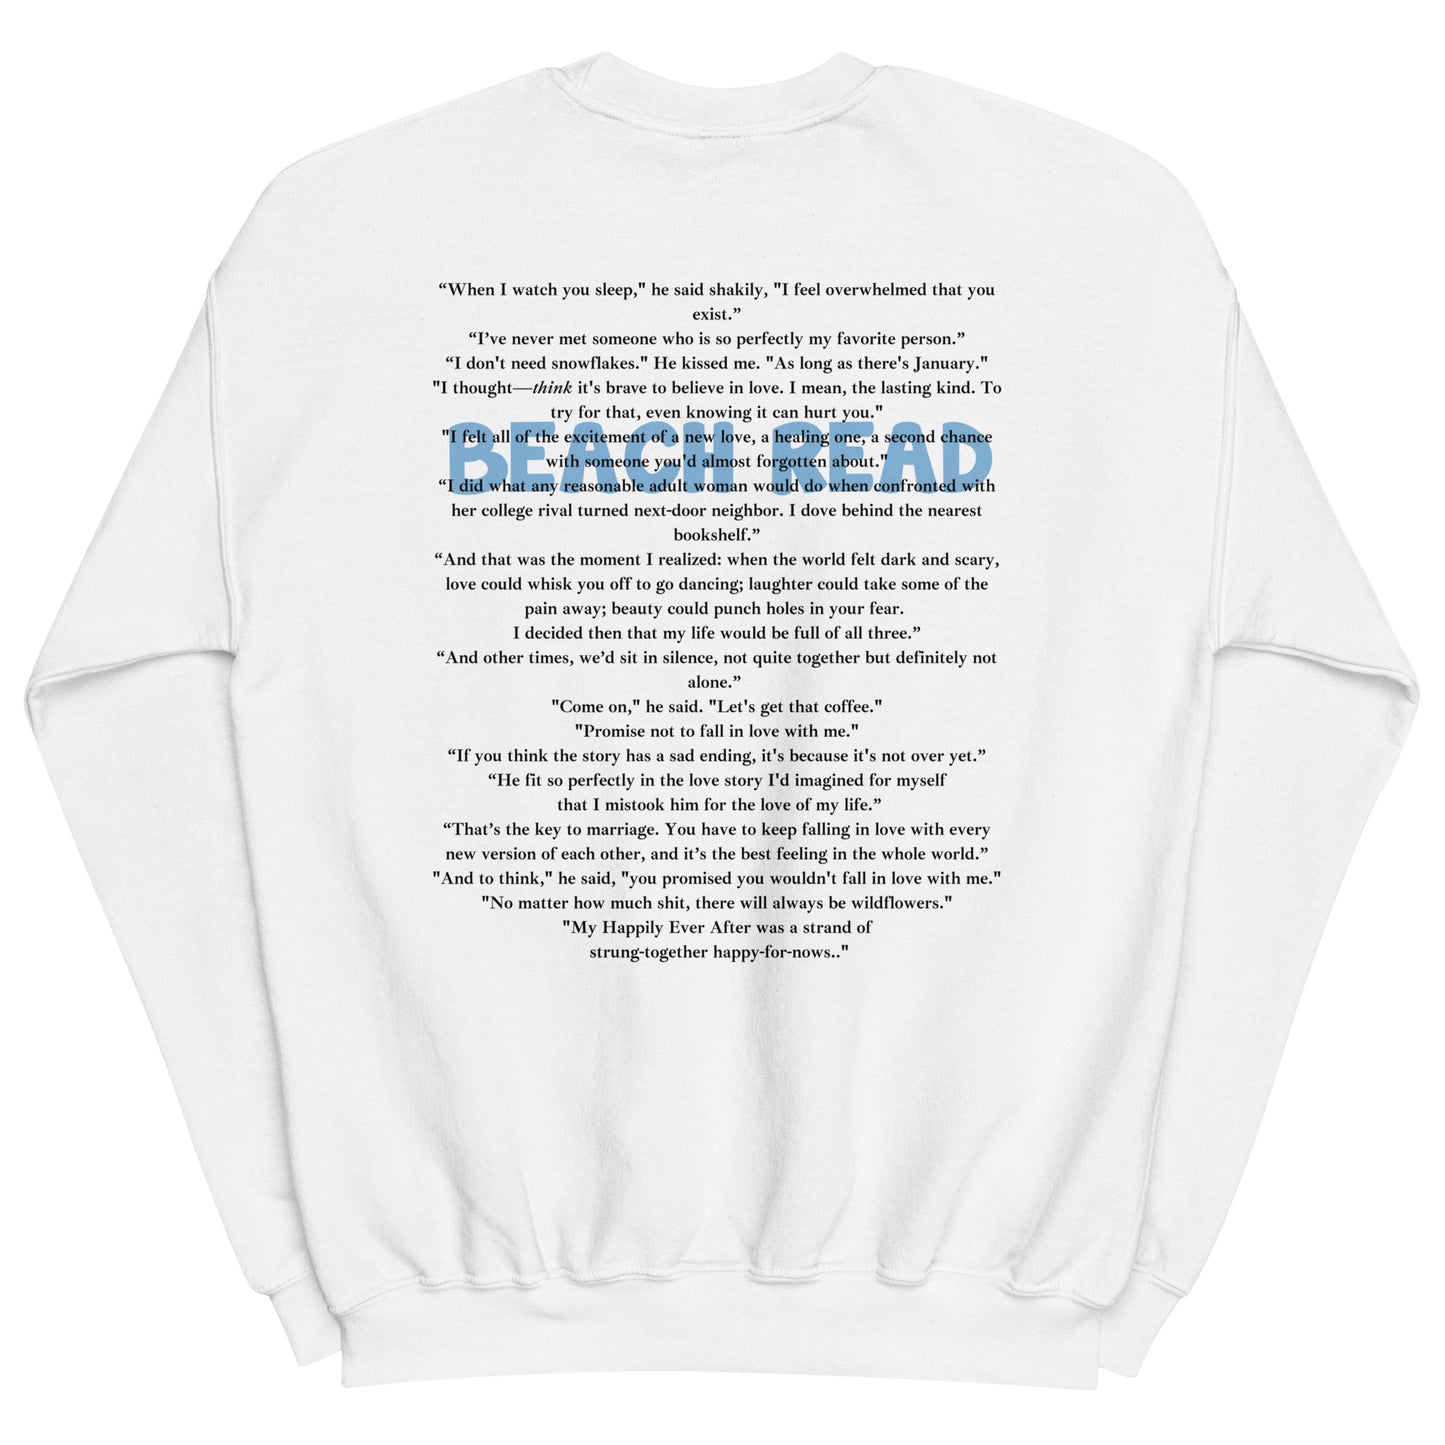 Beach Read Crewneck